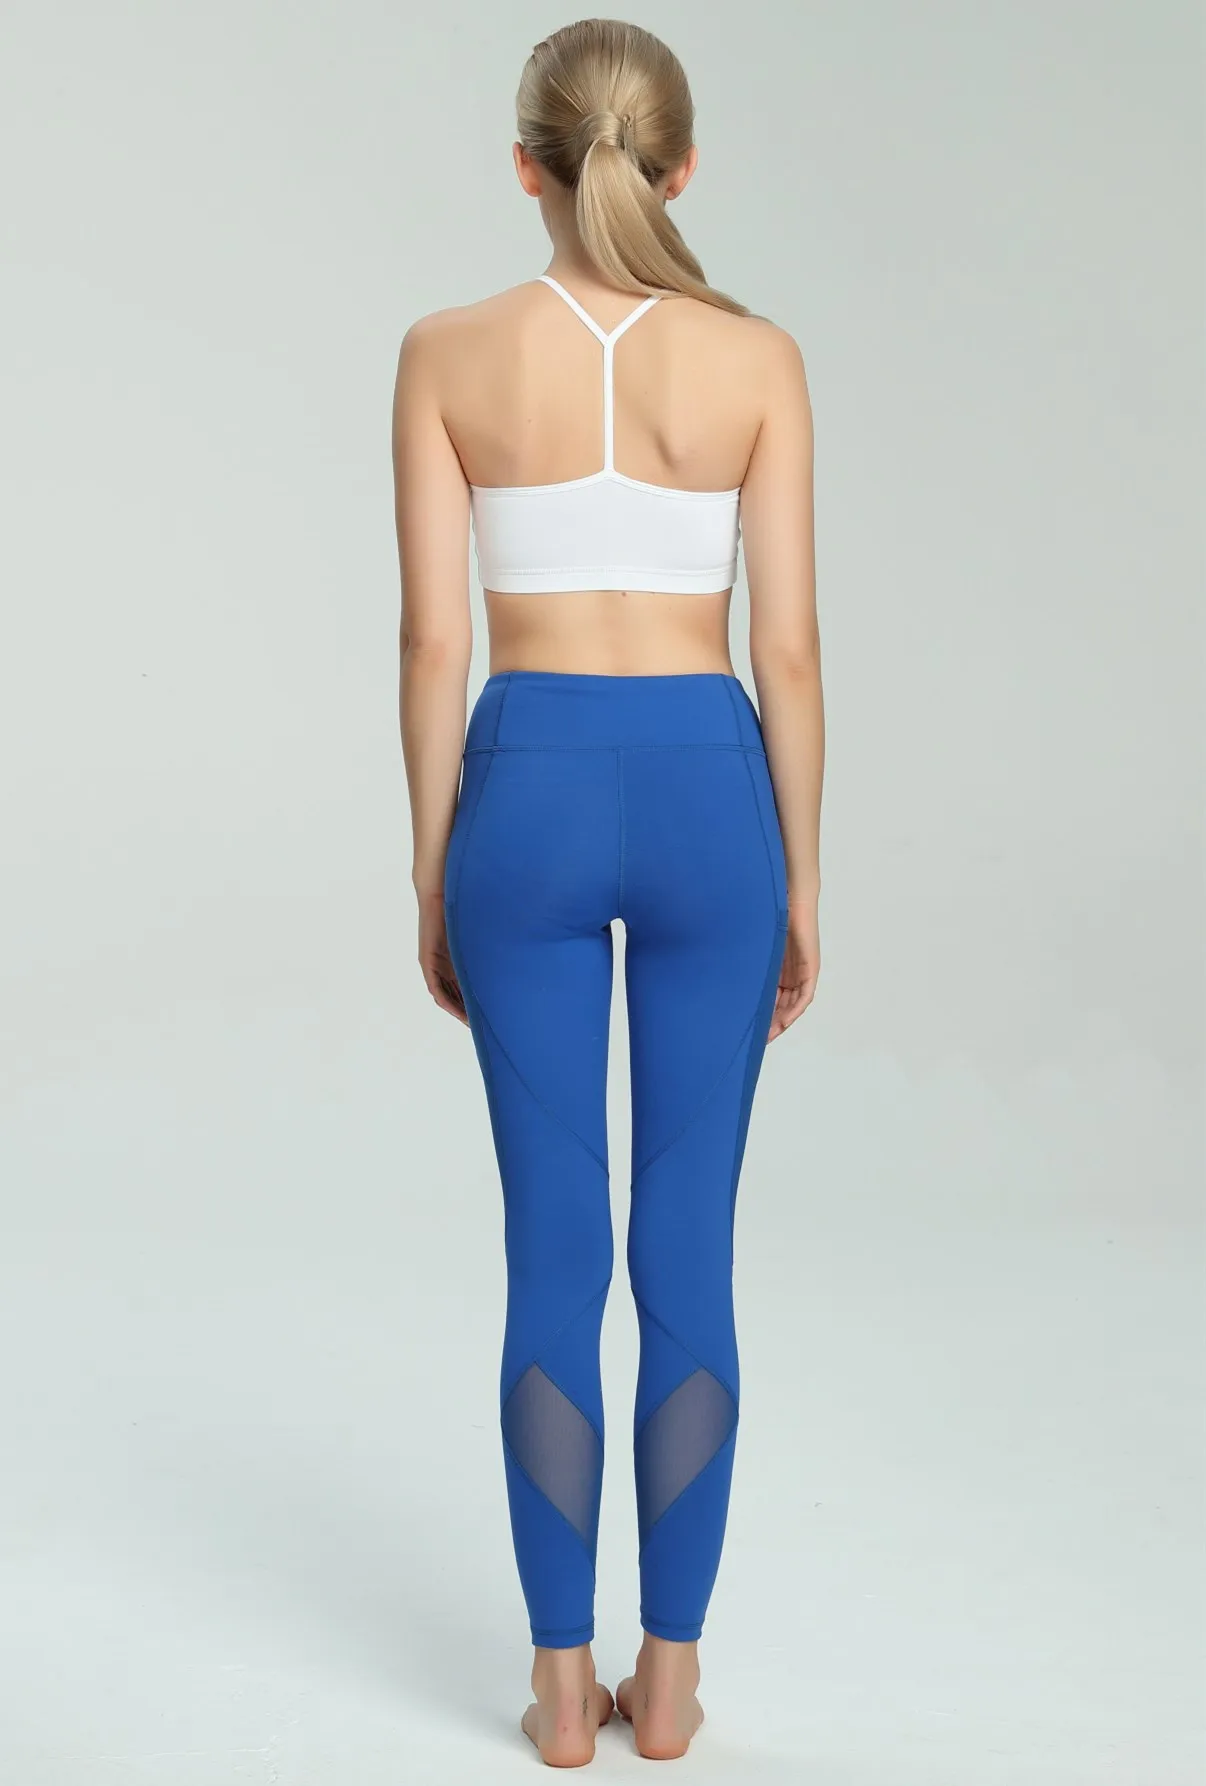 Wholesale Ladies' Yoga Pants in Canada | Bargains Group